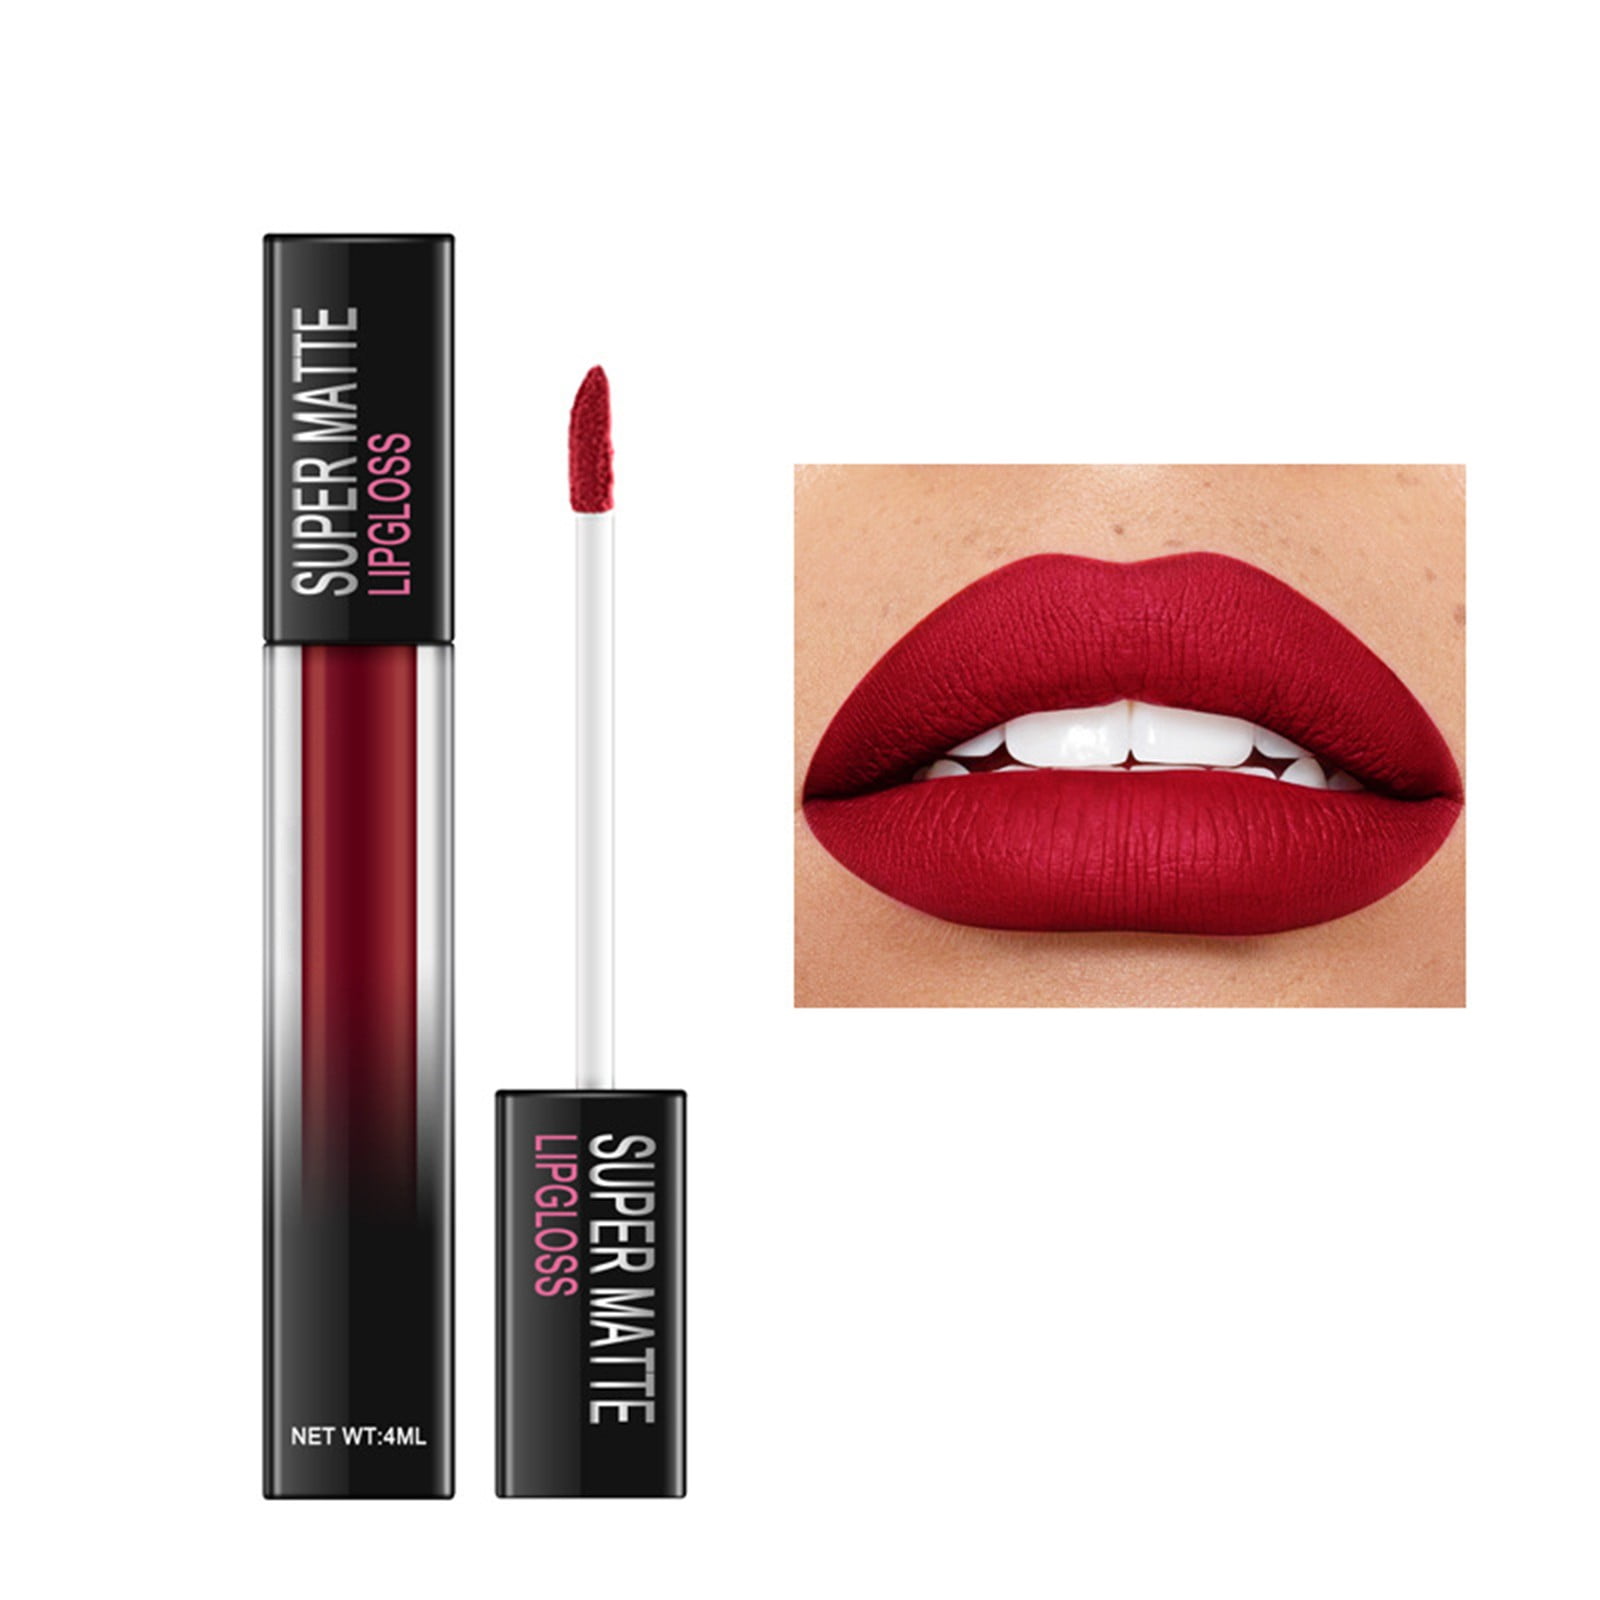 HSMQHJWE Color The World Lipsticks for Mature Women Rose Liquid